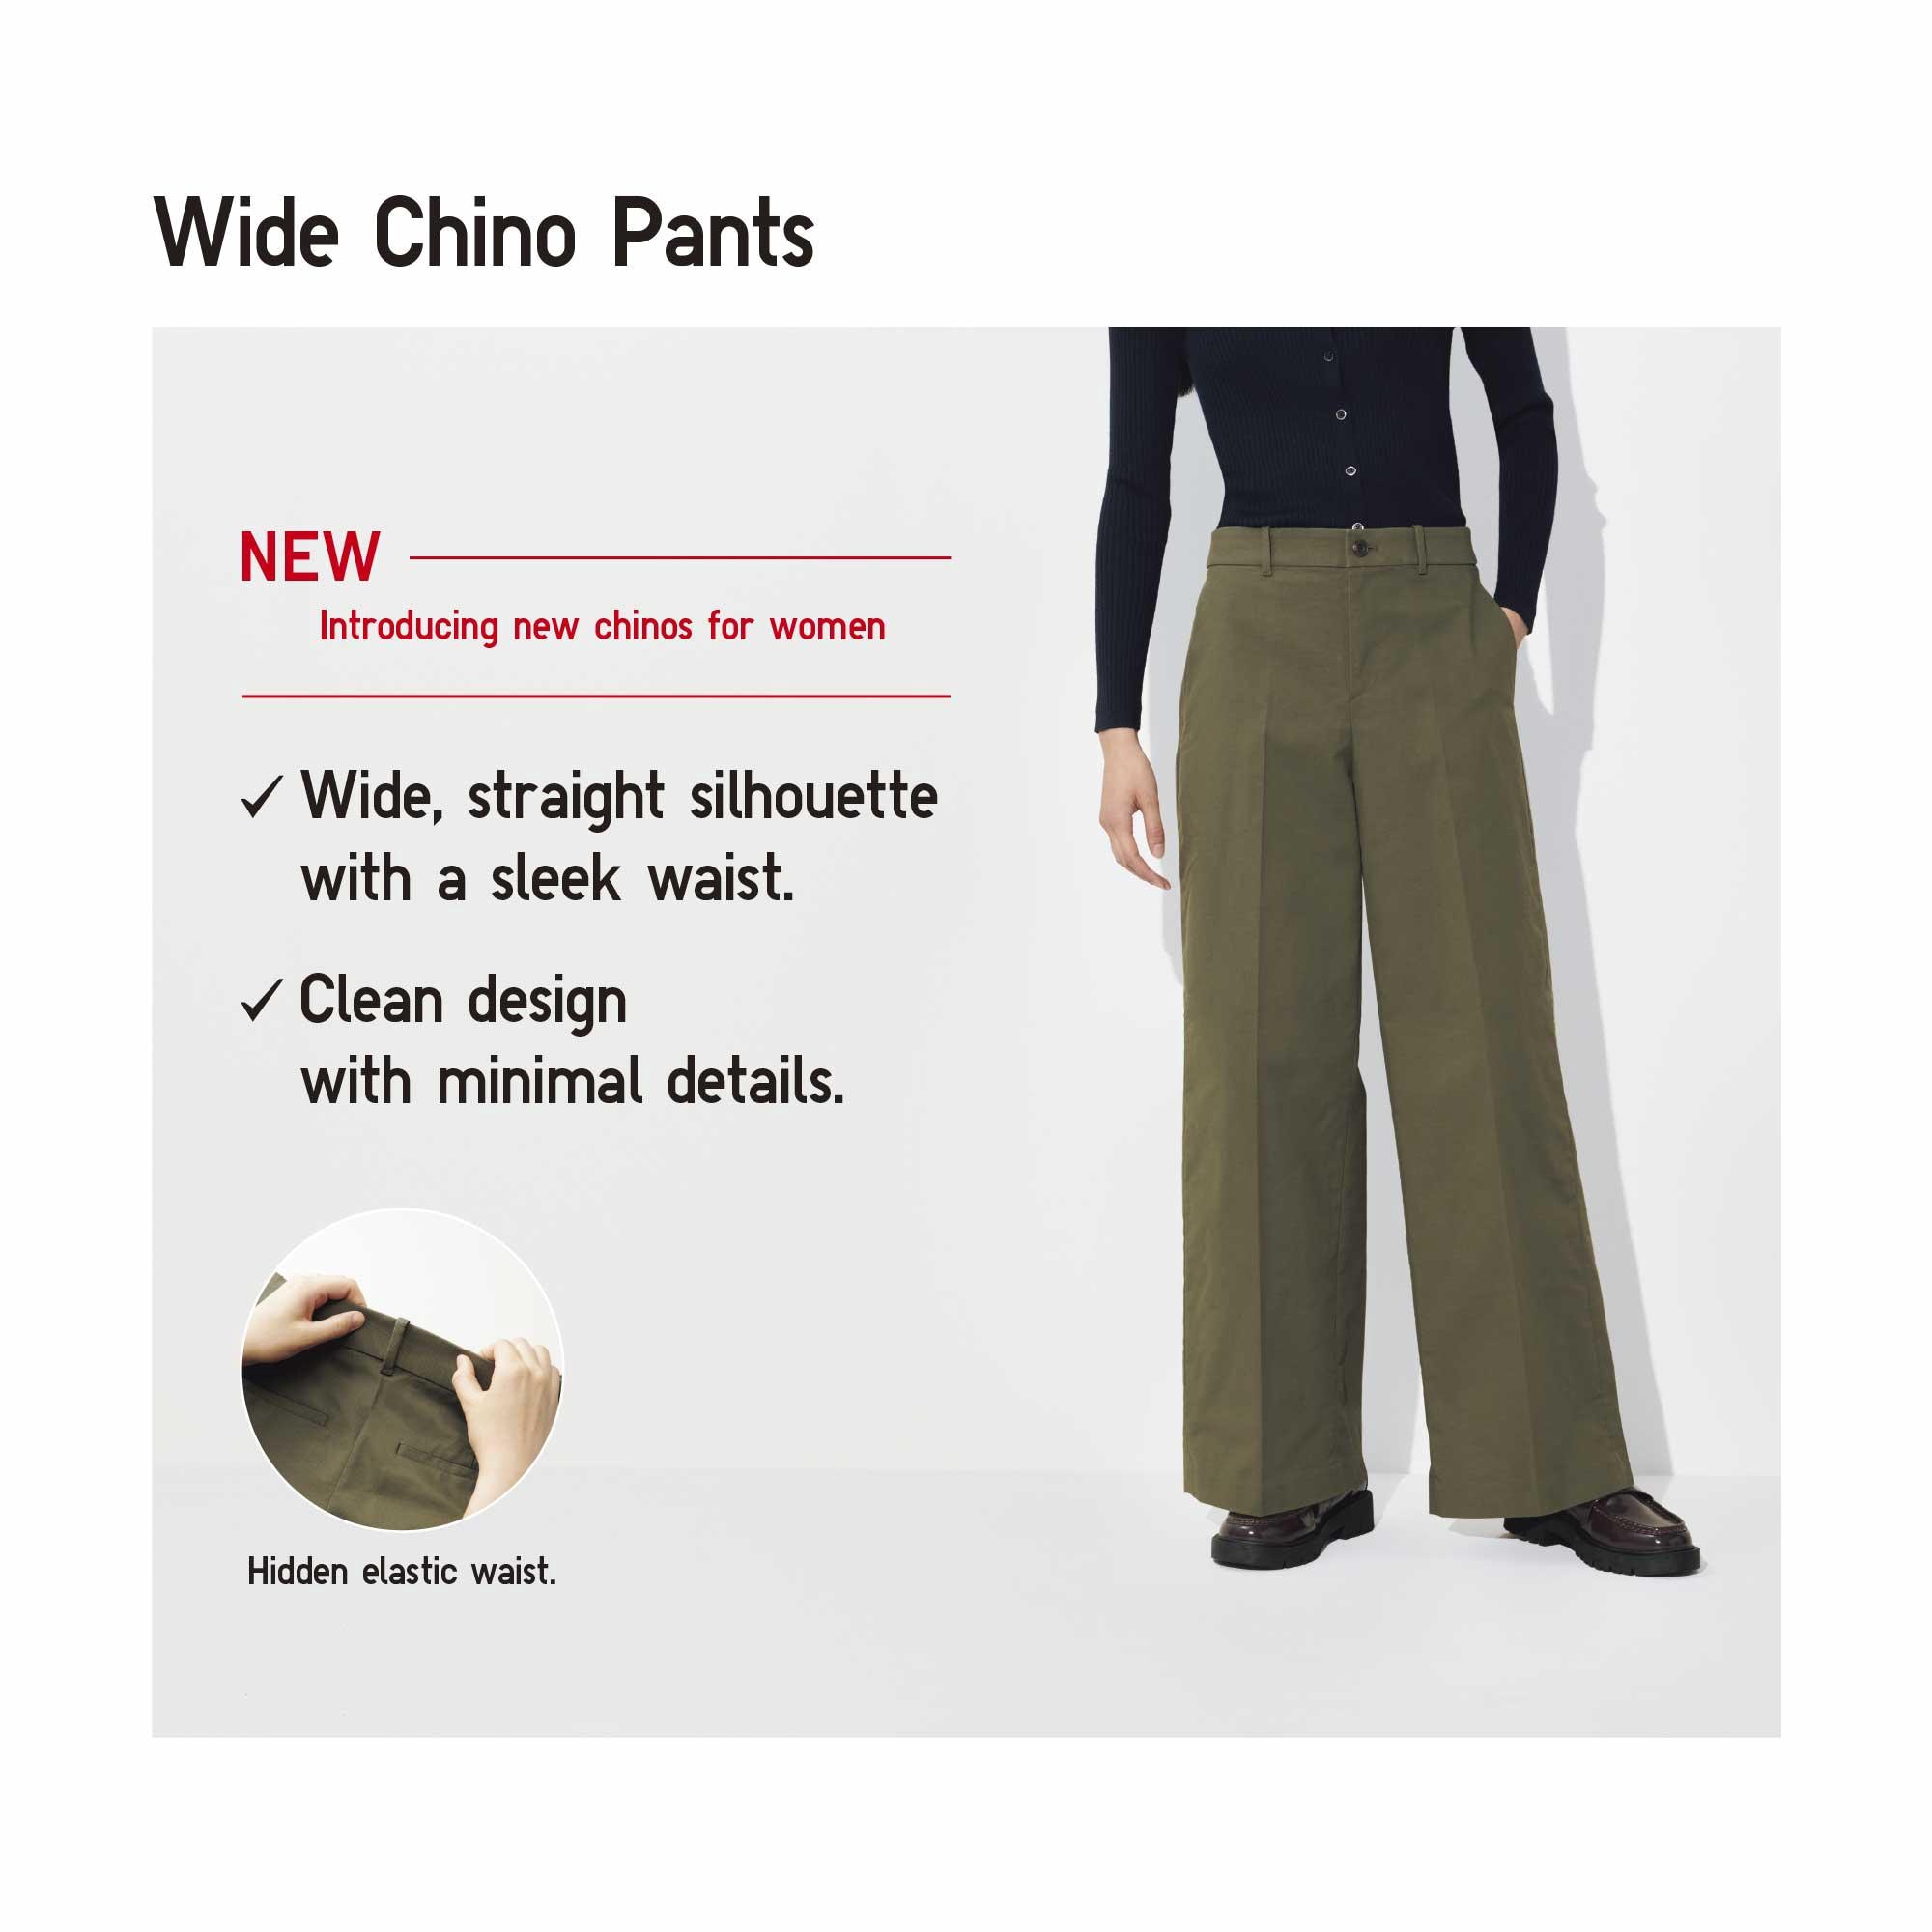 WIDE CHINO PANTS